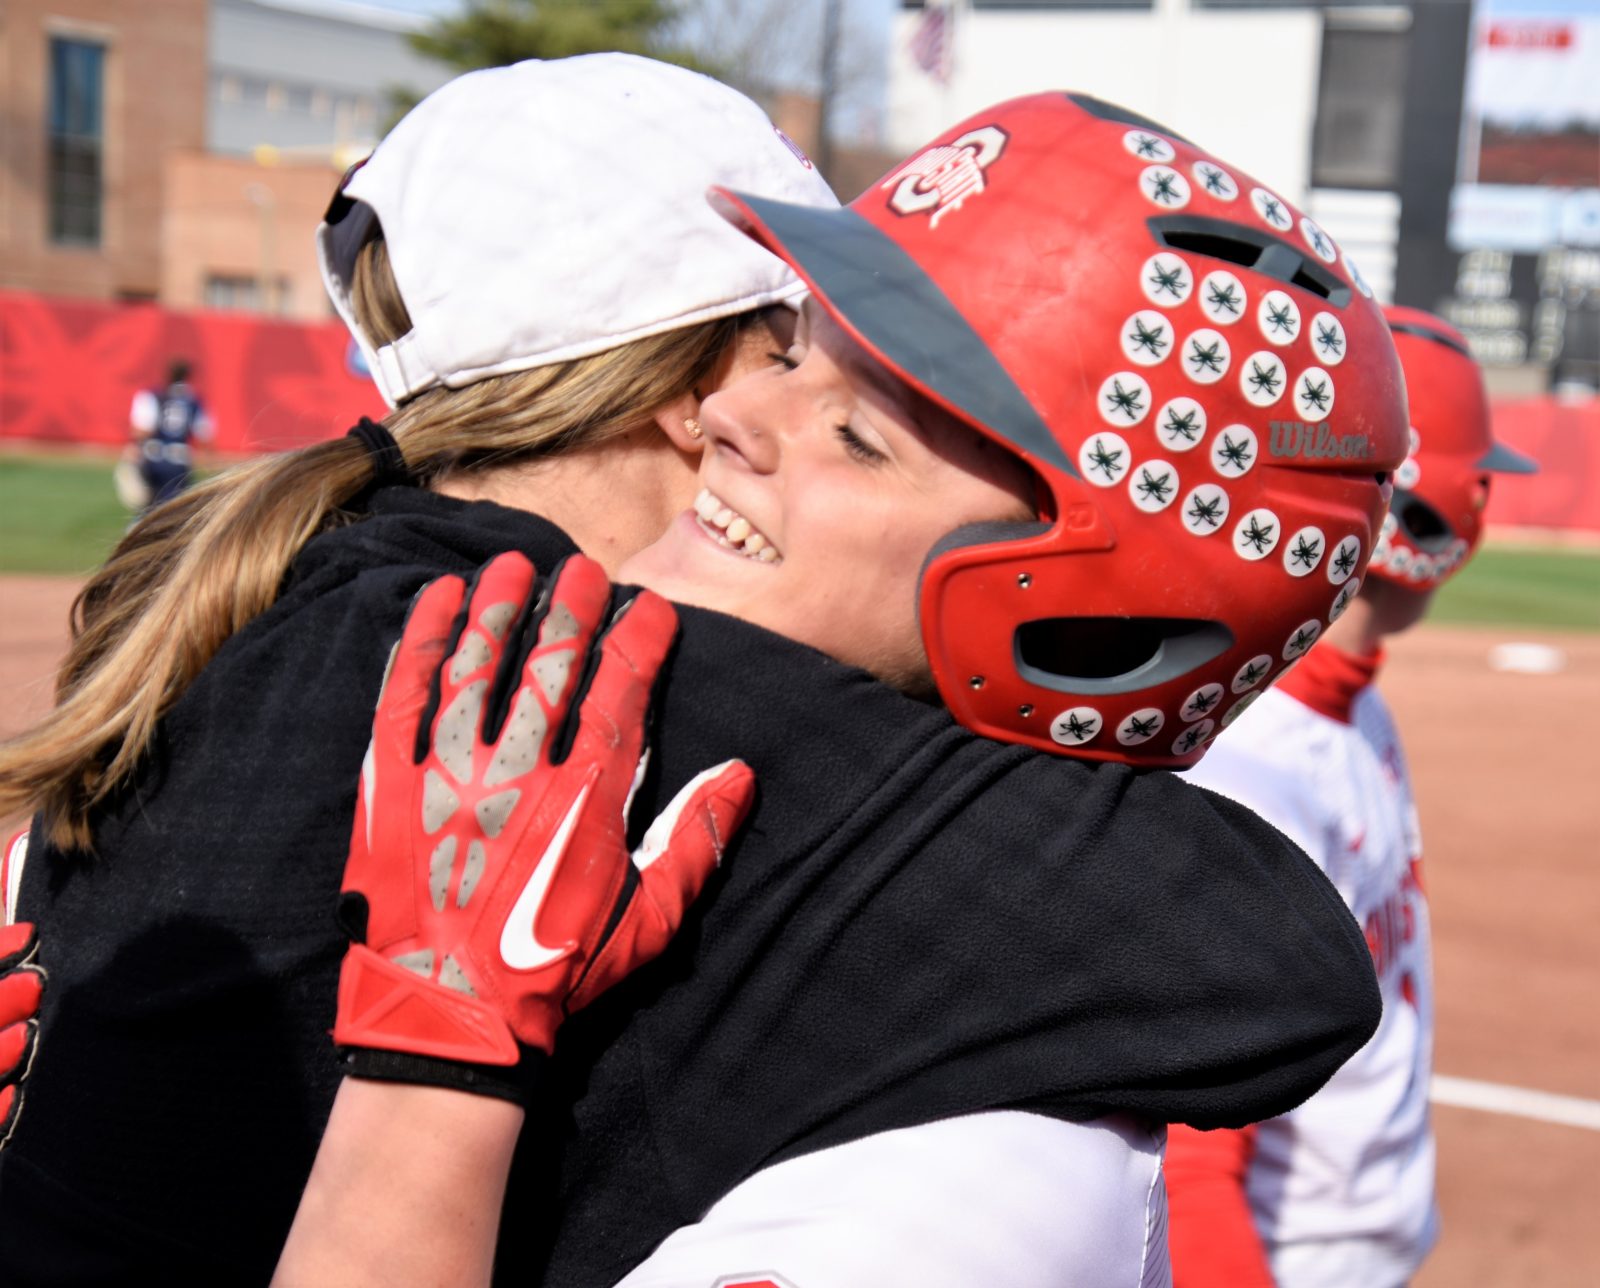 Buckeye Head Coach Kelly Kovach Schoenly gives her player Emily Clark a big hug after she